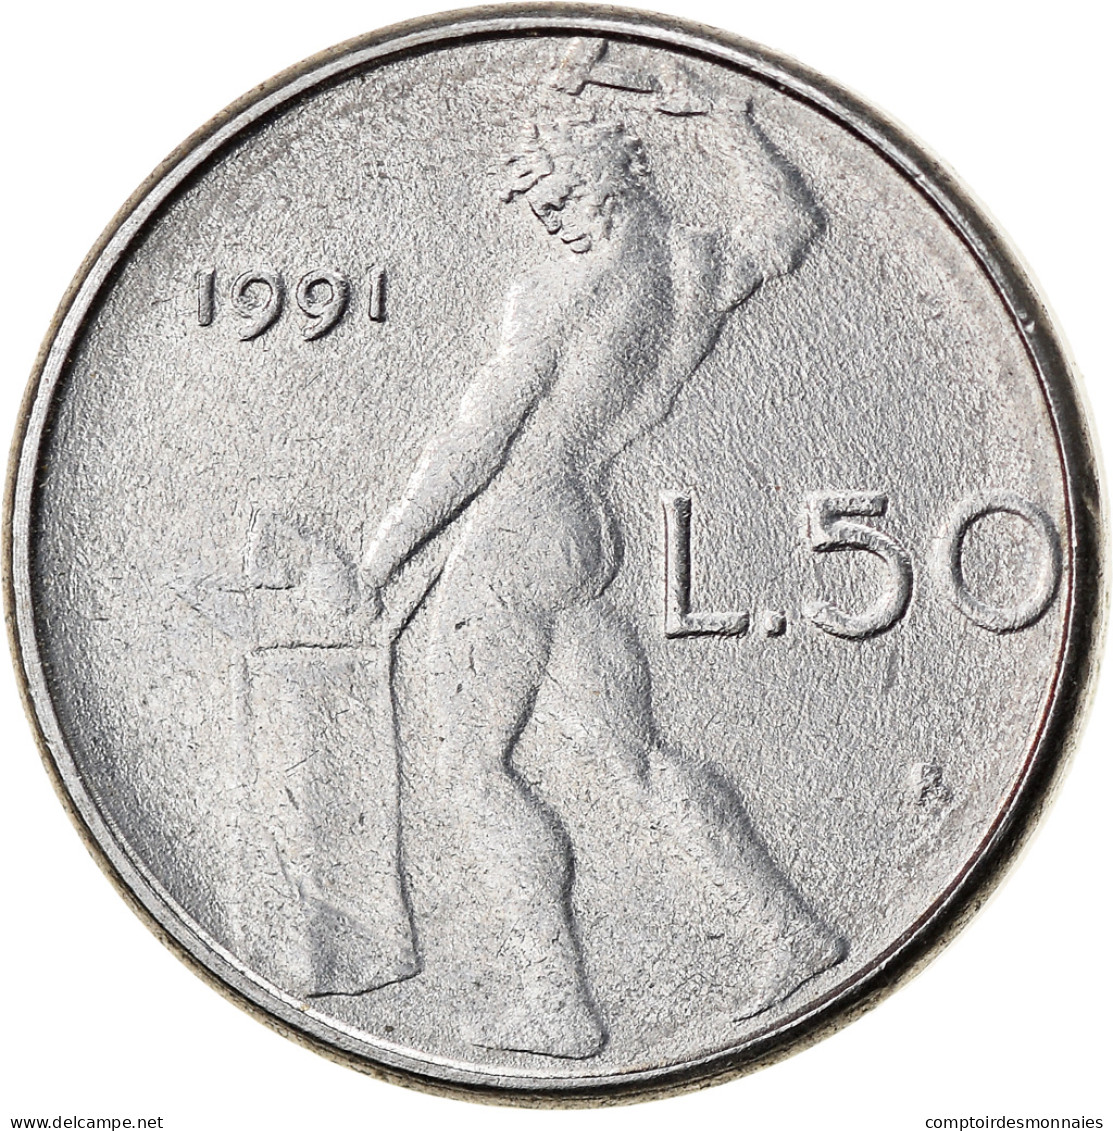 Monnaie, Italie, 50 Lire, 1991, Rome, TB+, Stainless Steel, KM:95.2 - 50 Liras